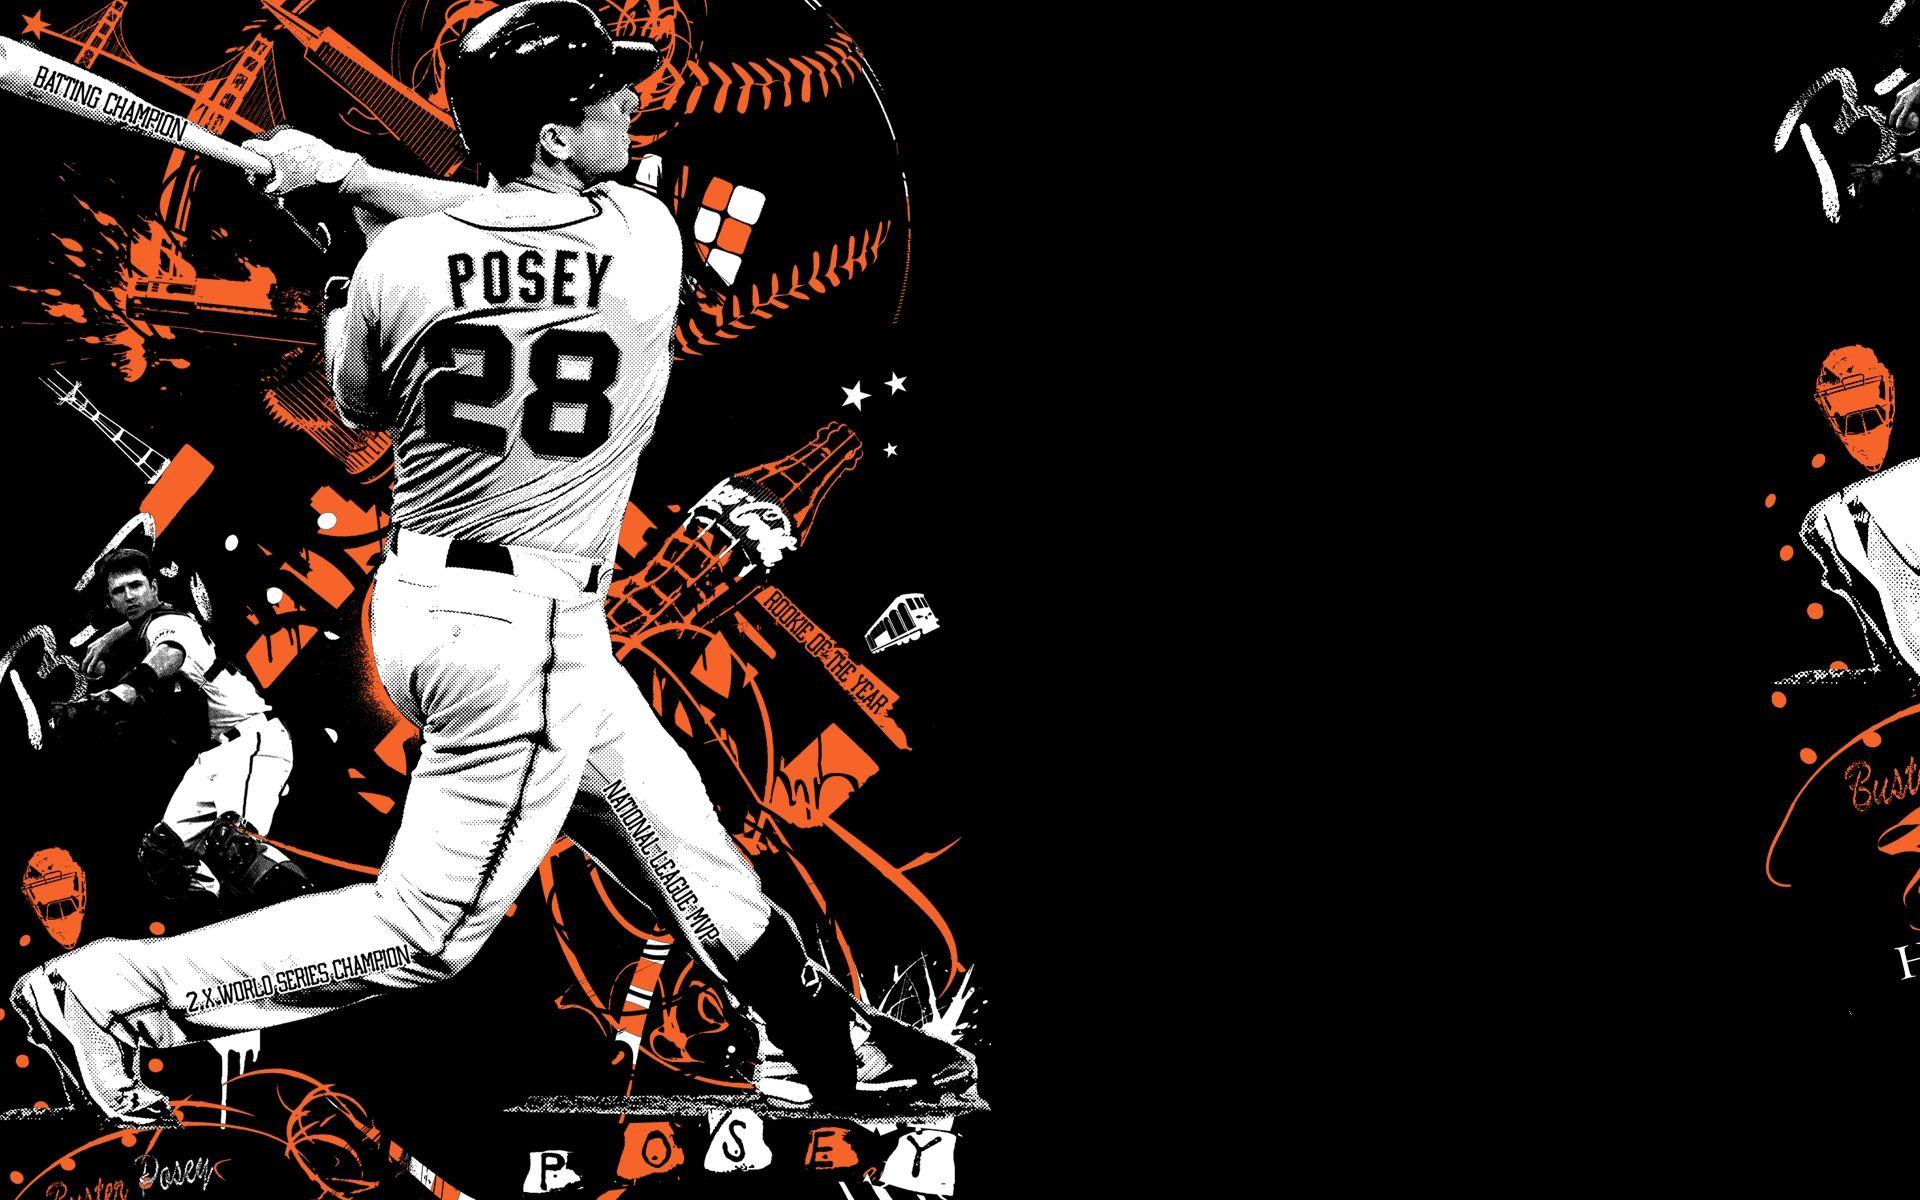 San Francisco Giants - Buster Posey Wallpaper - Baseball & Sports Background  Wallpapers on Desktop Nexus (Image 1176096)